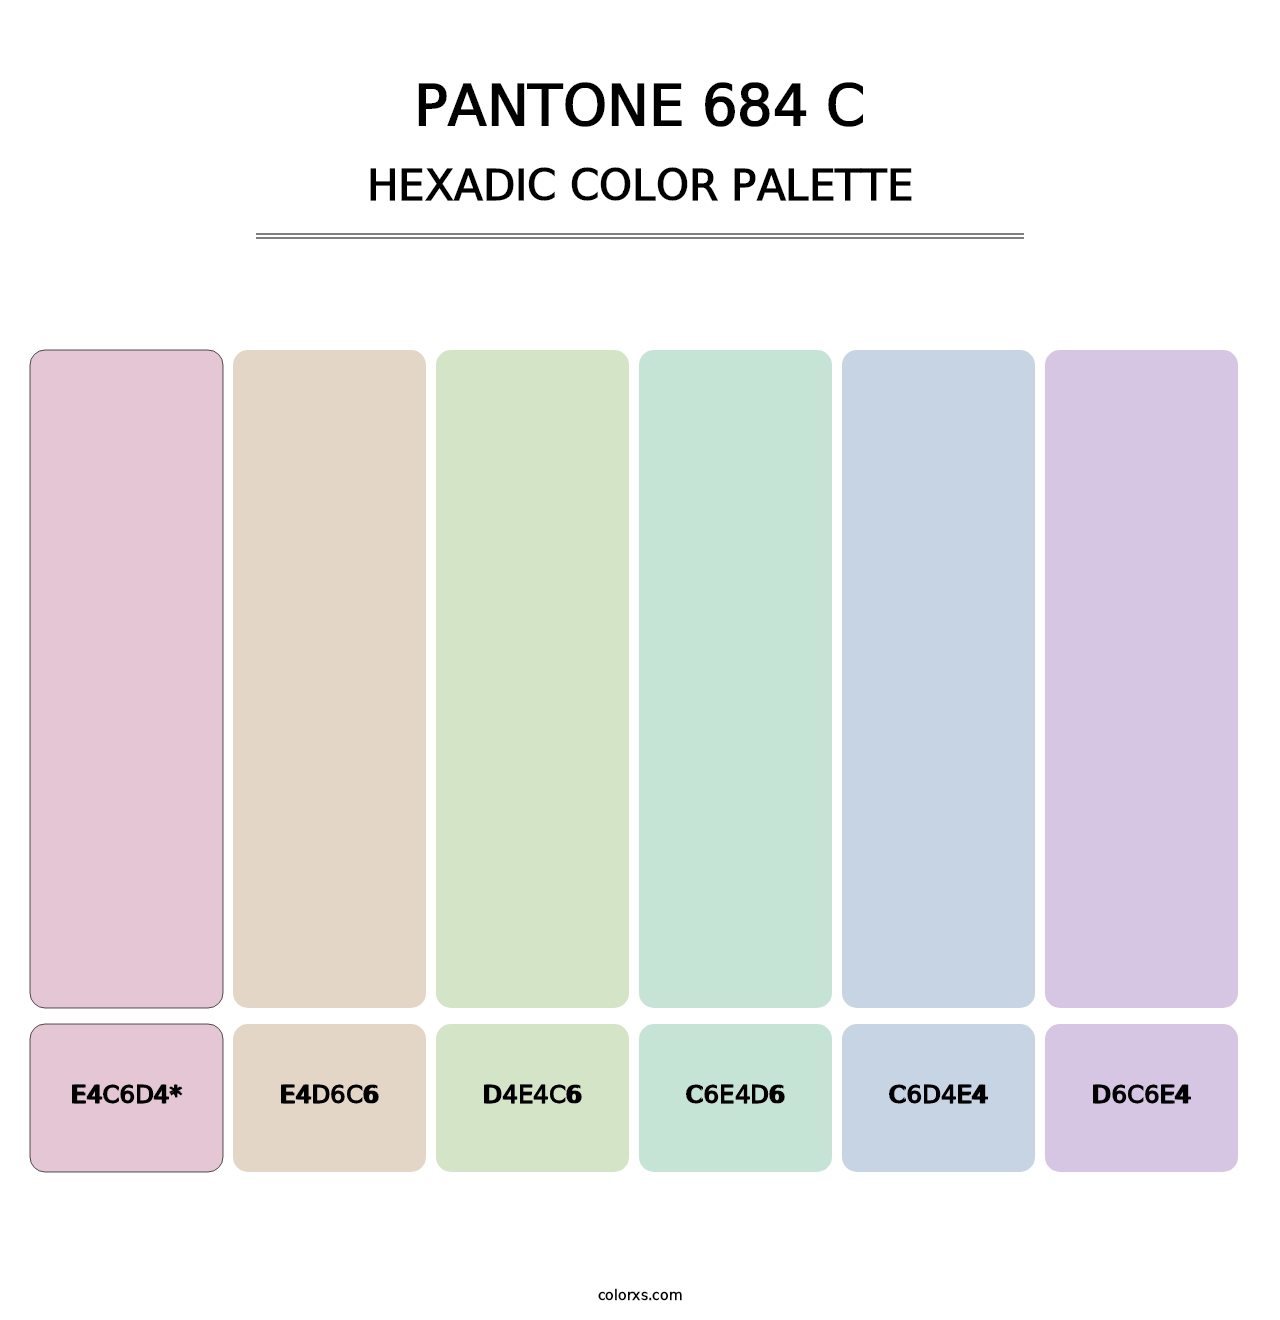 PANTONE 684 C - Hexadic Color Palette